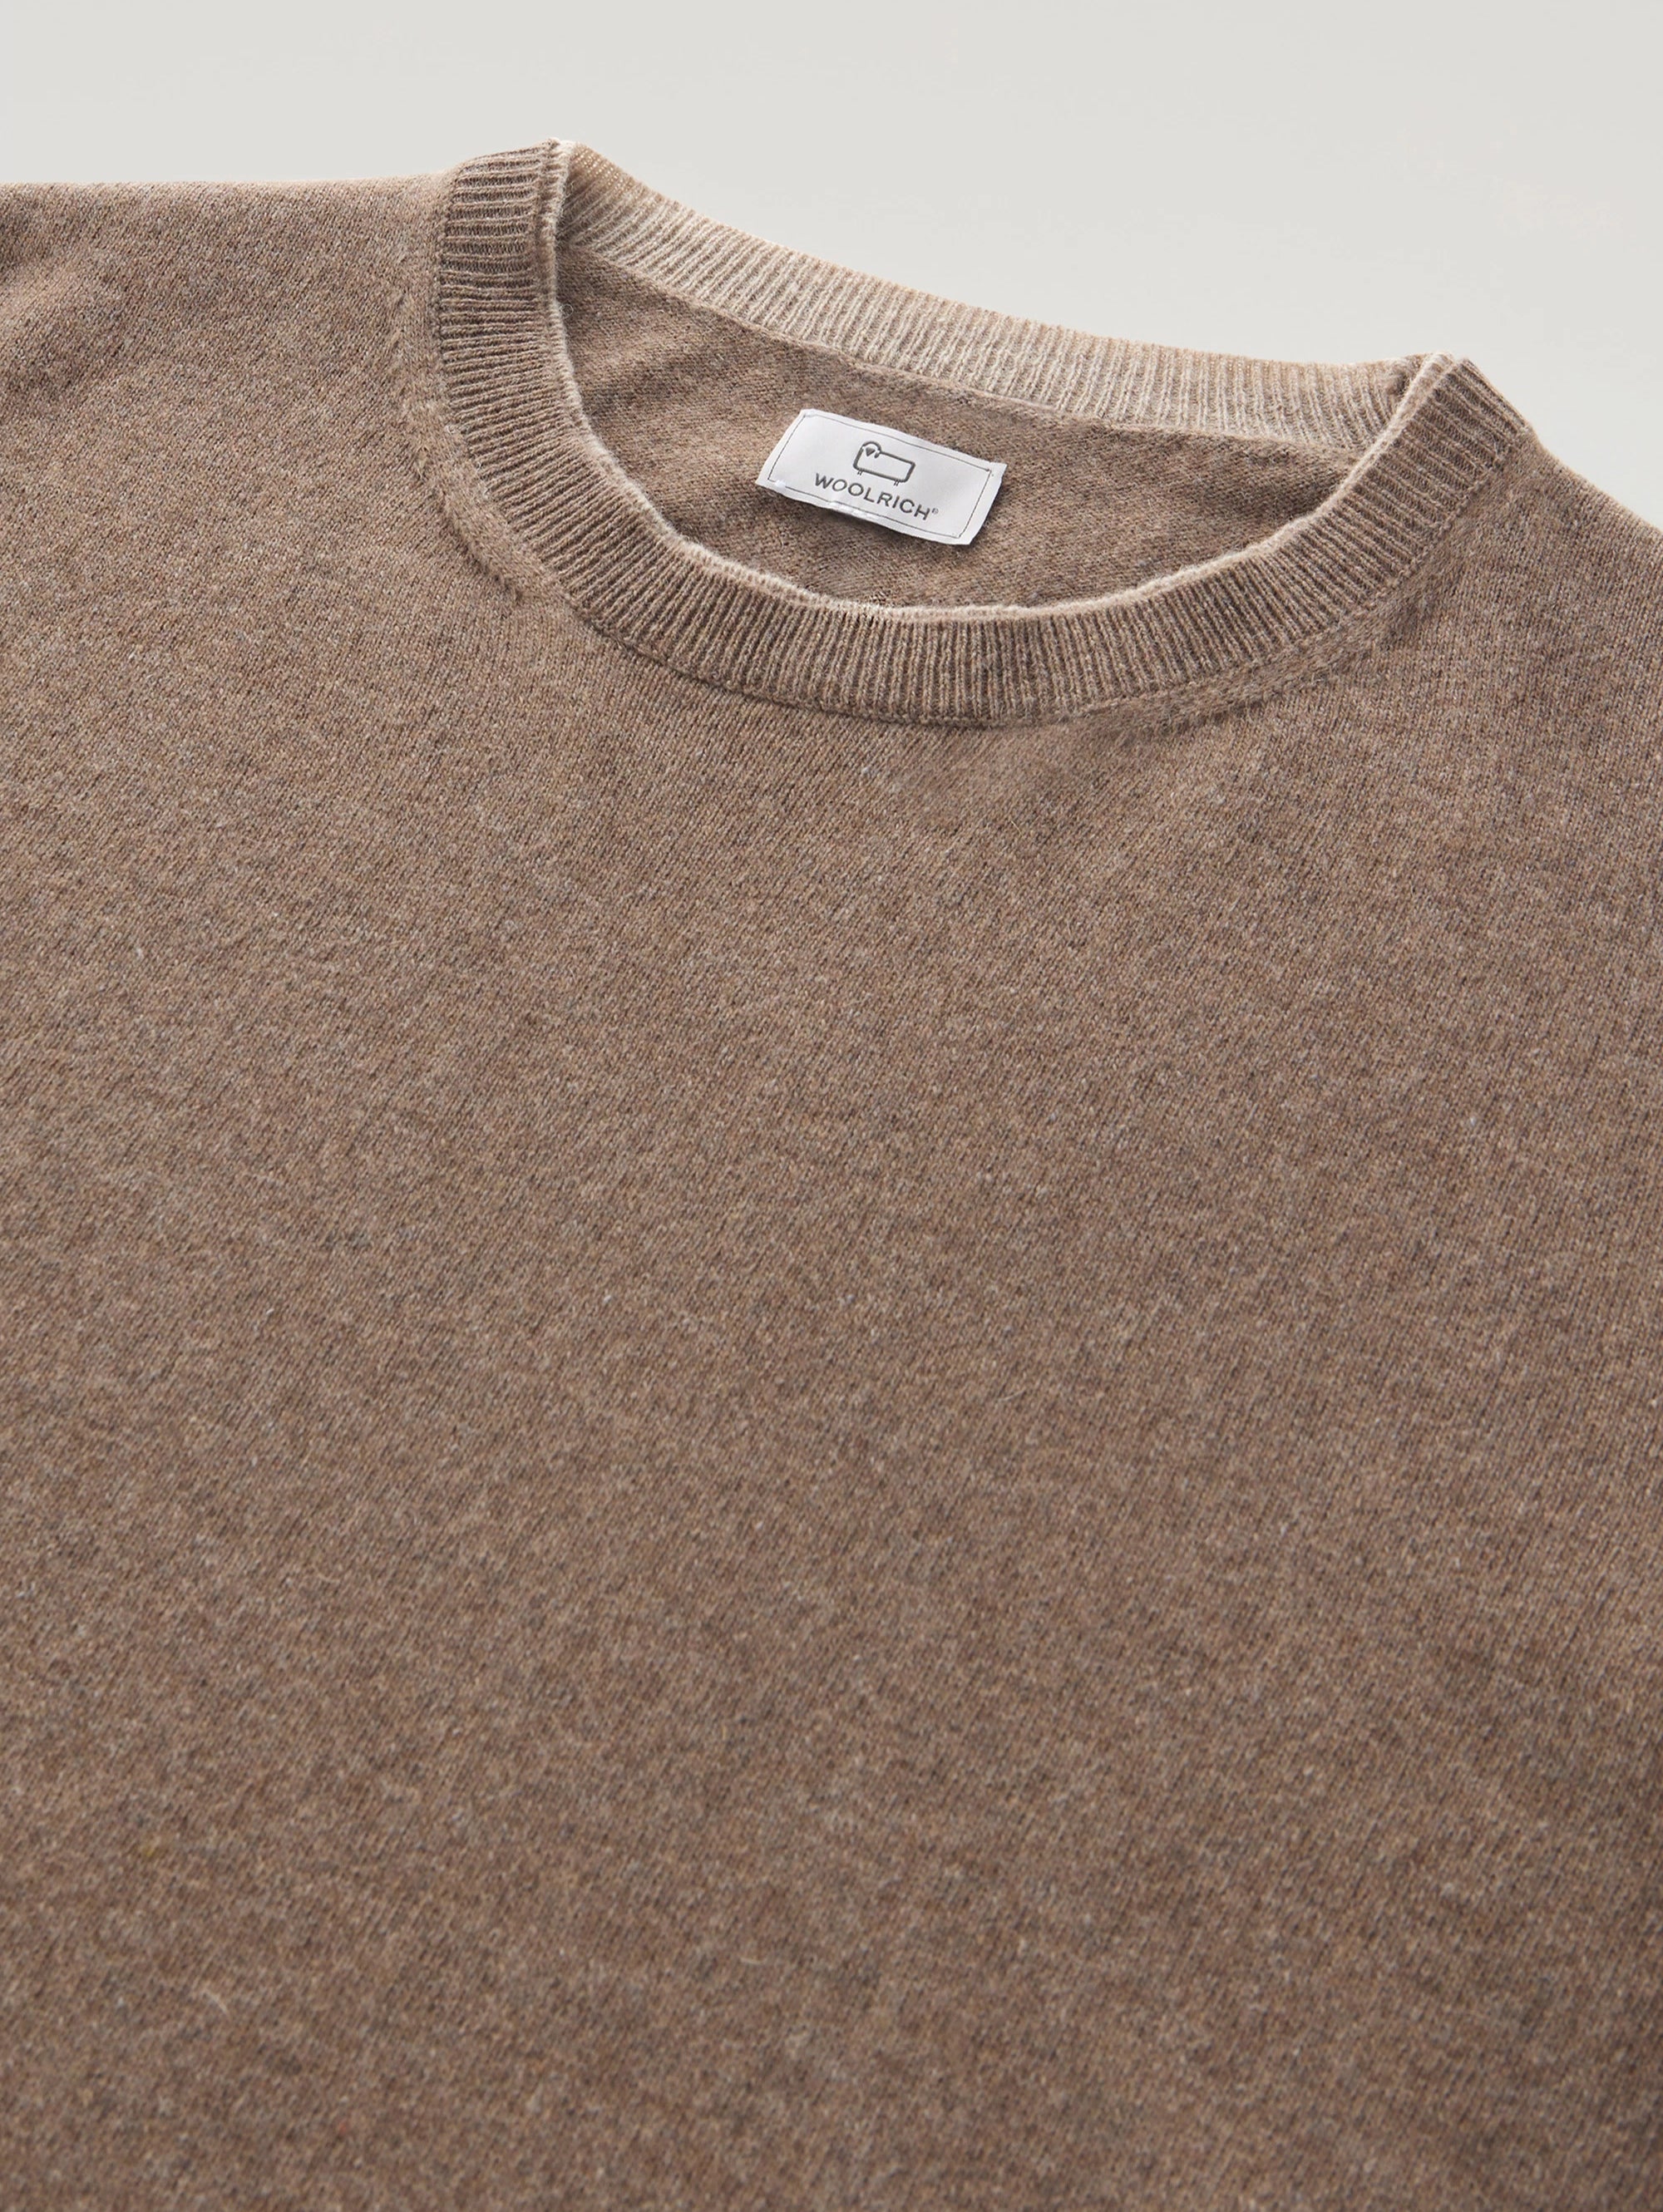 Crewneck sweater in dove-grey merino wool